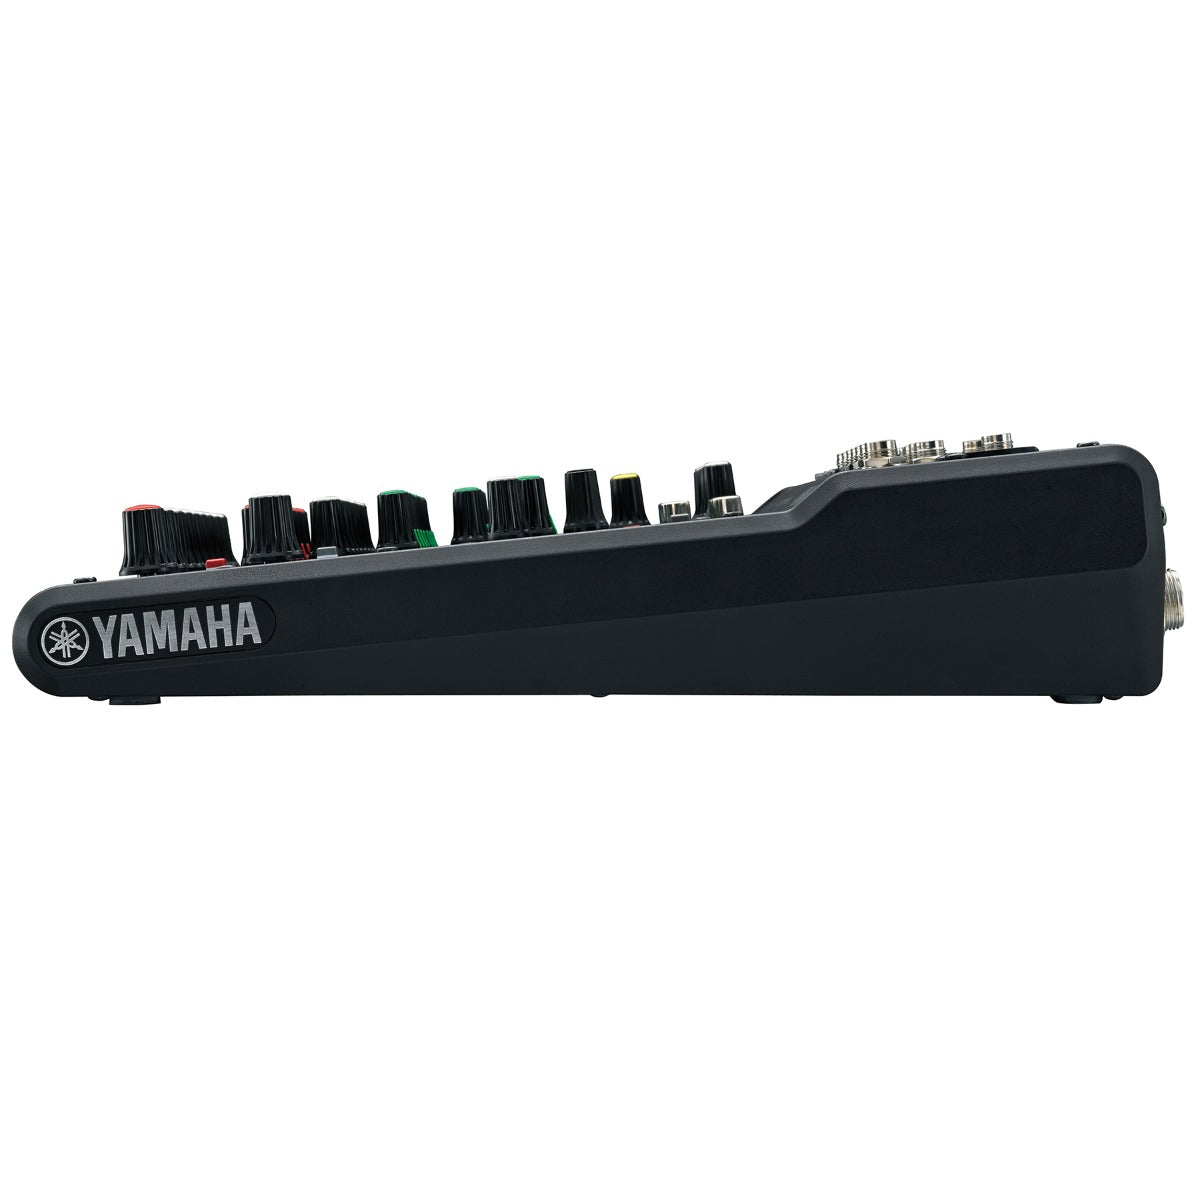 Yamaha MG10XU 10-Channel Compact Stereo Mixer/USB Interface view 3